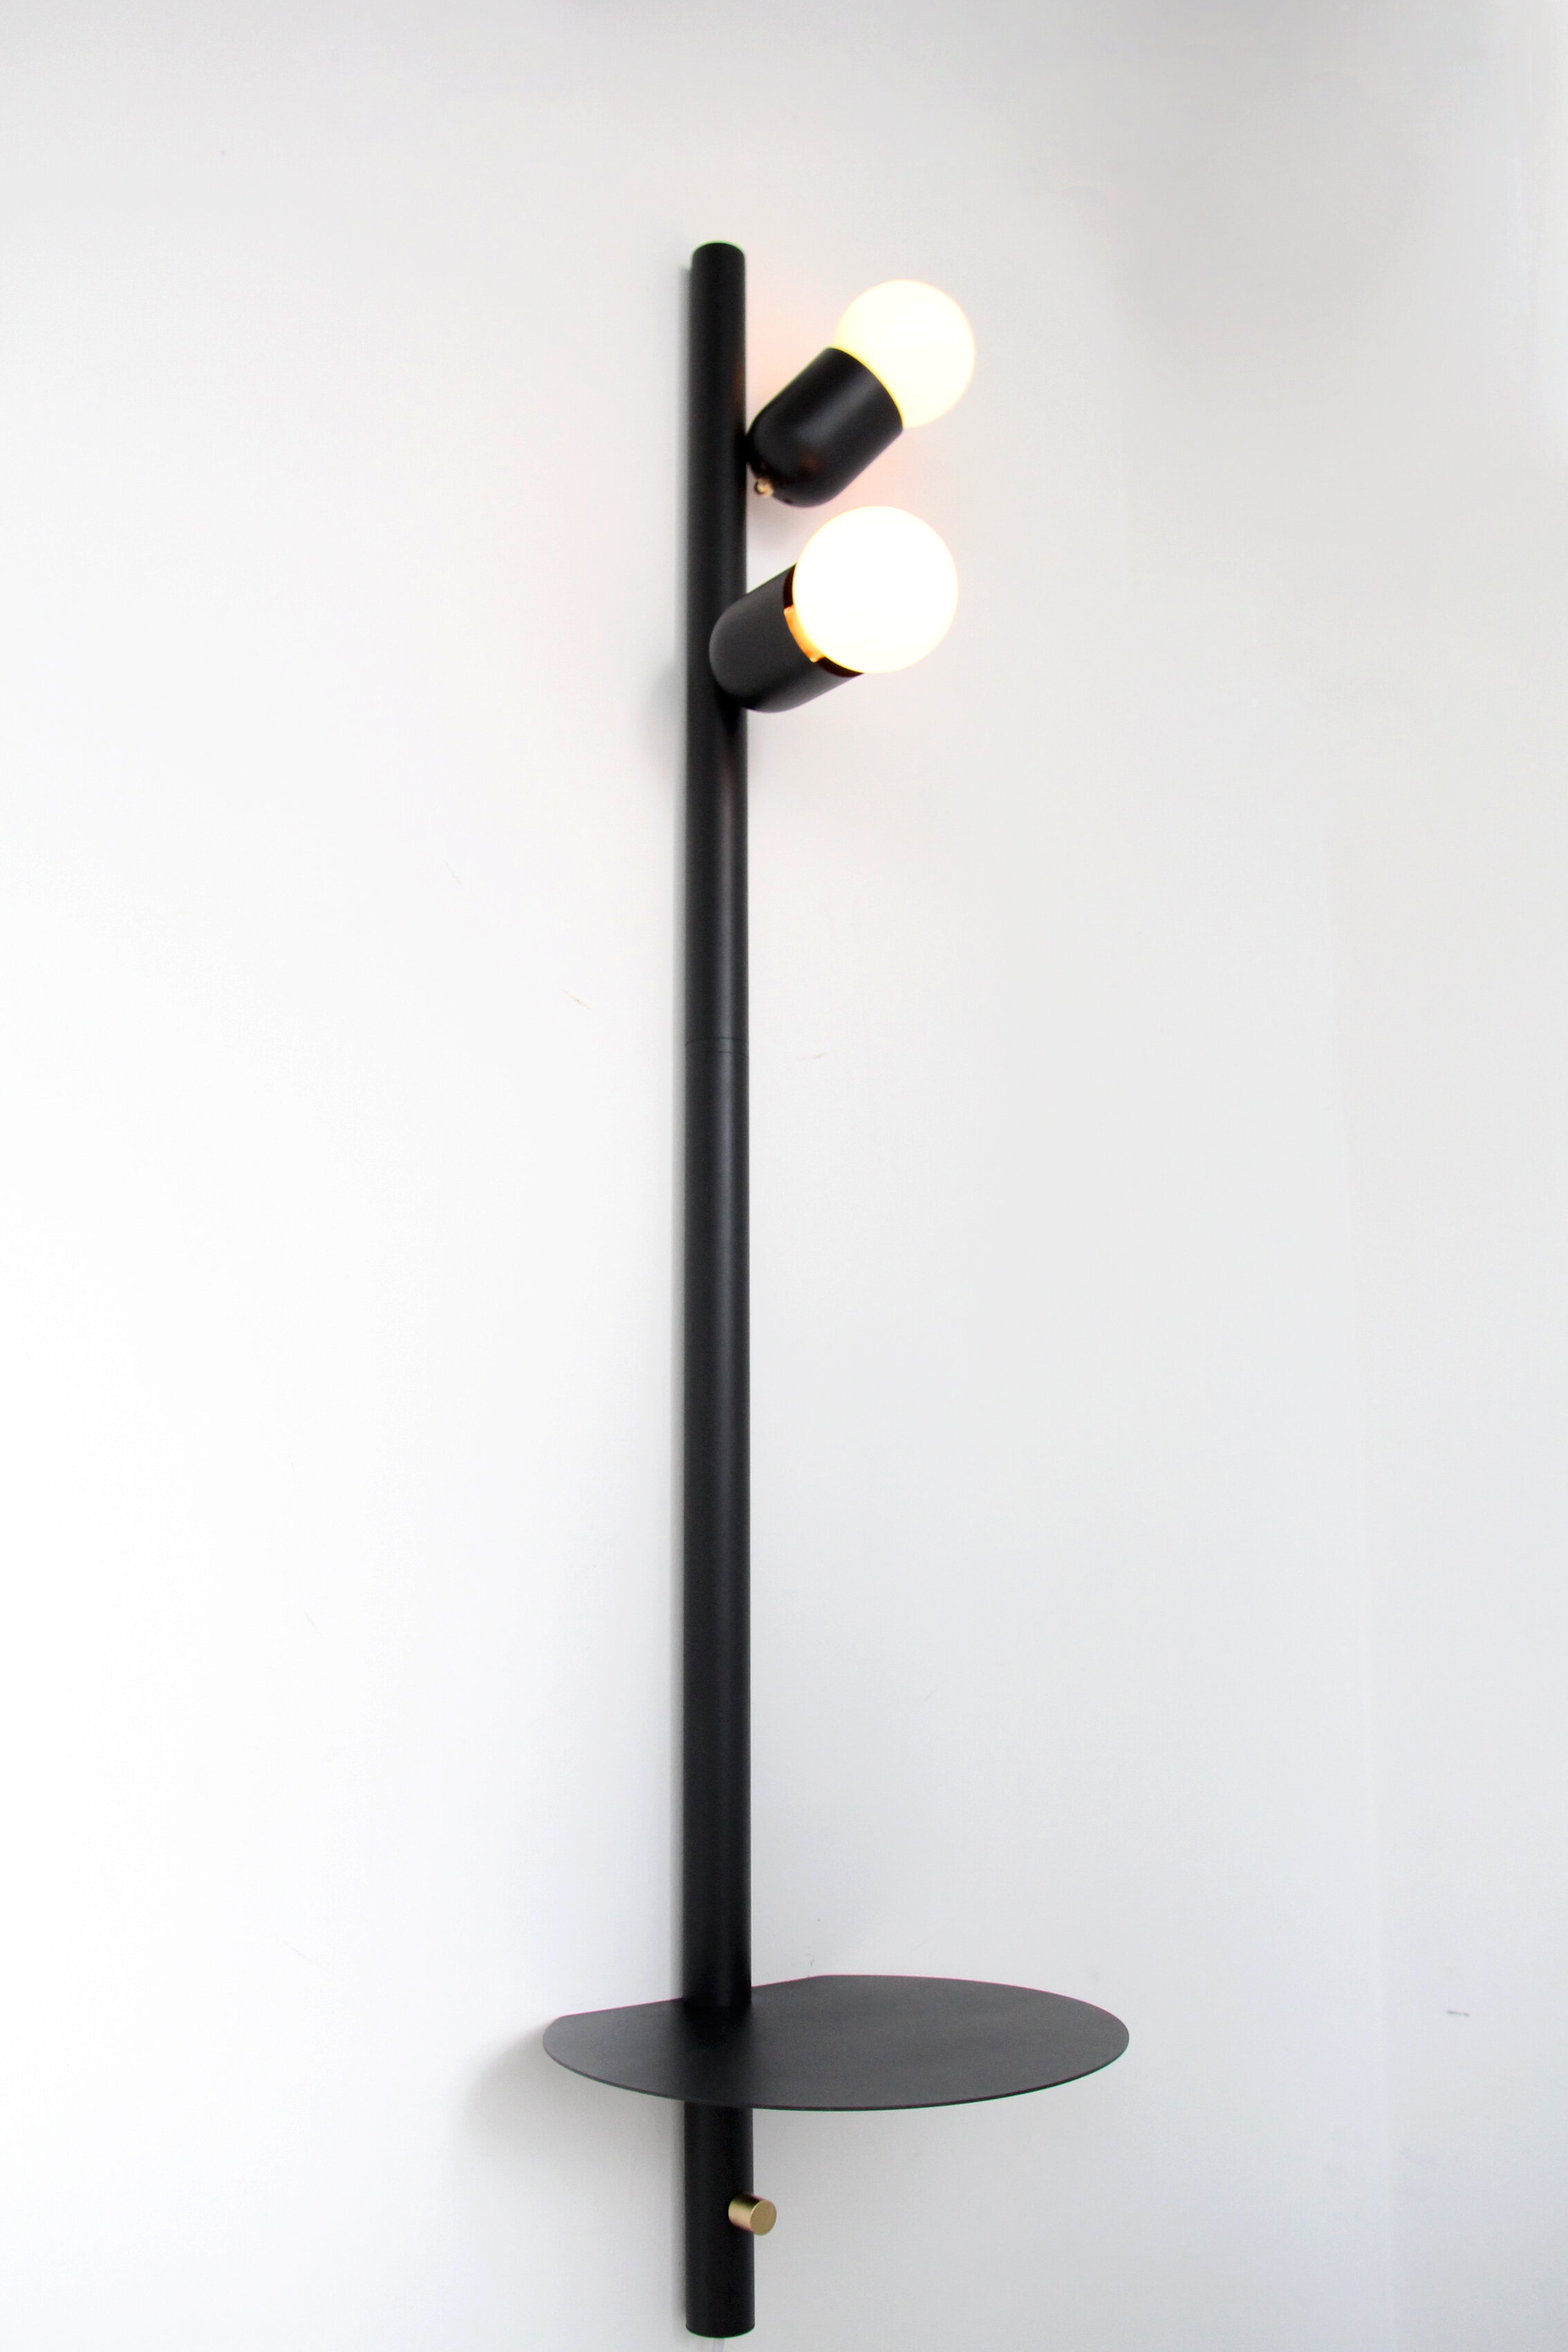 studio-botte_Gotas palo wall lamp_004.jpg